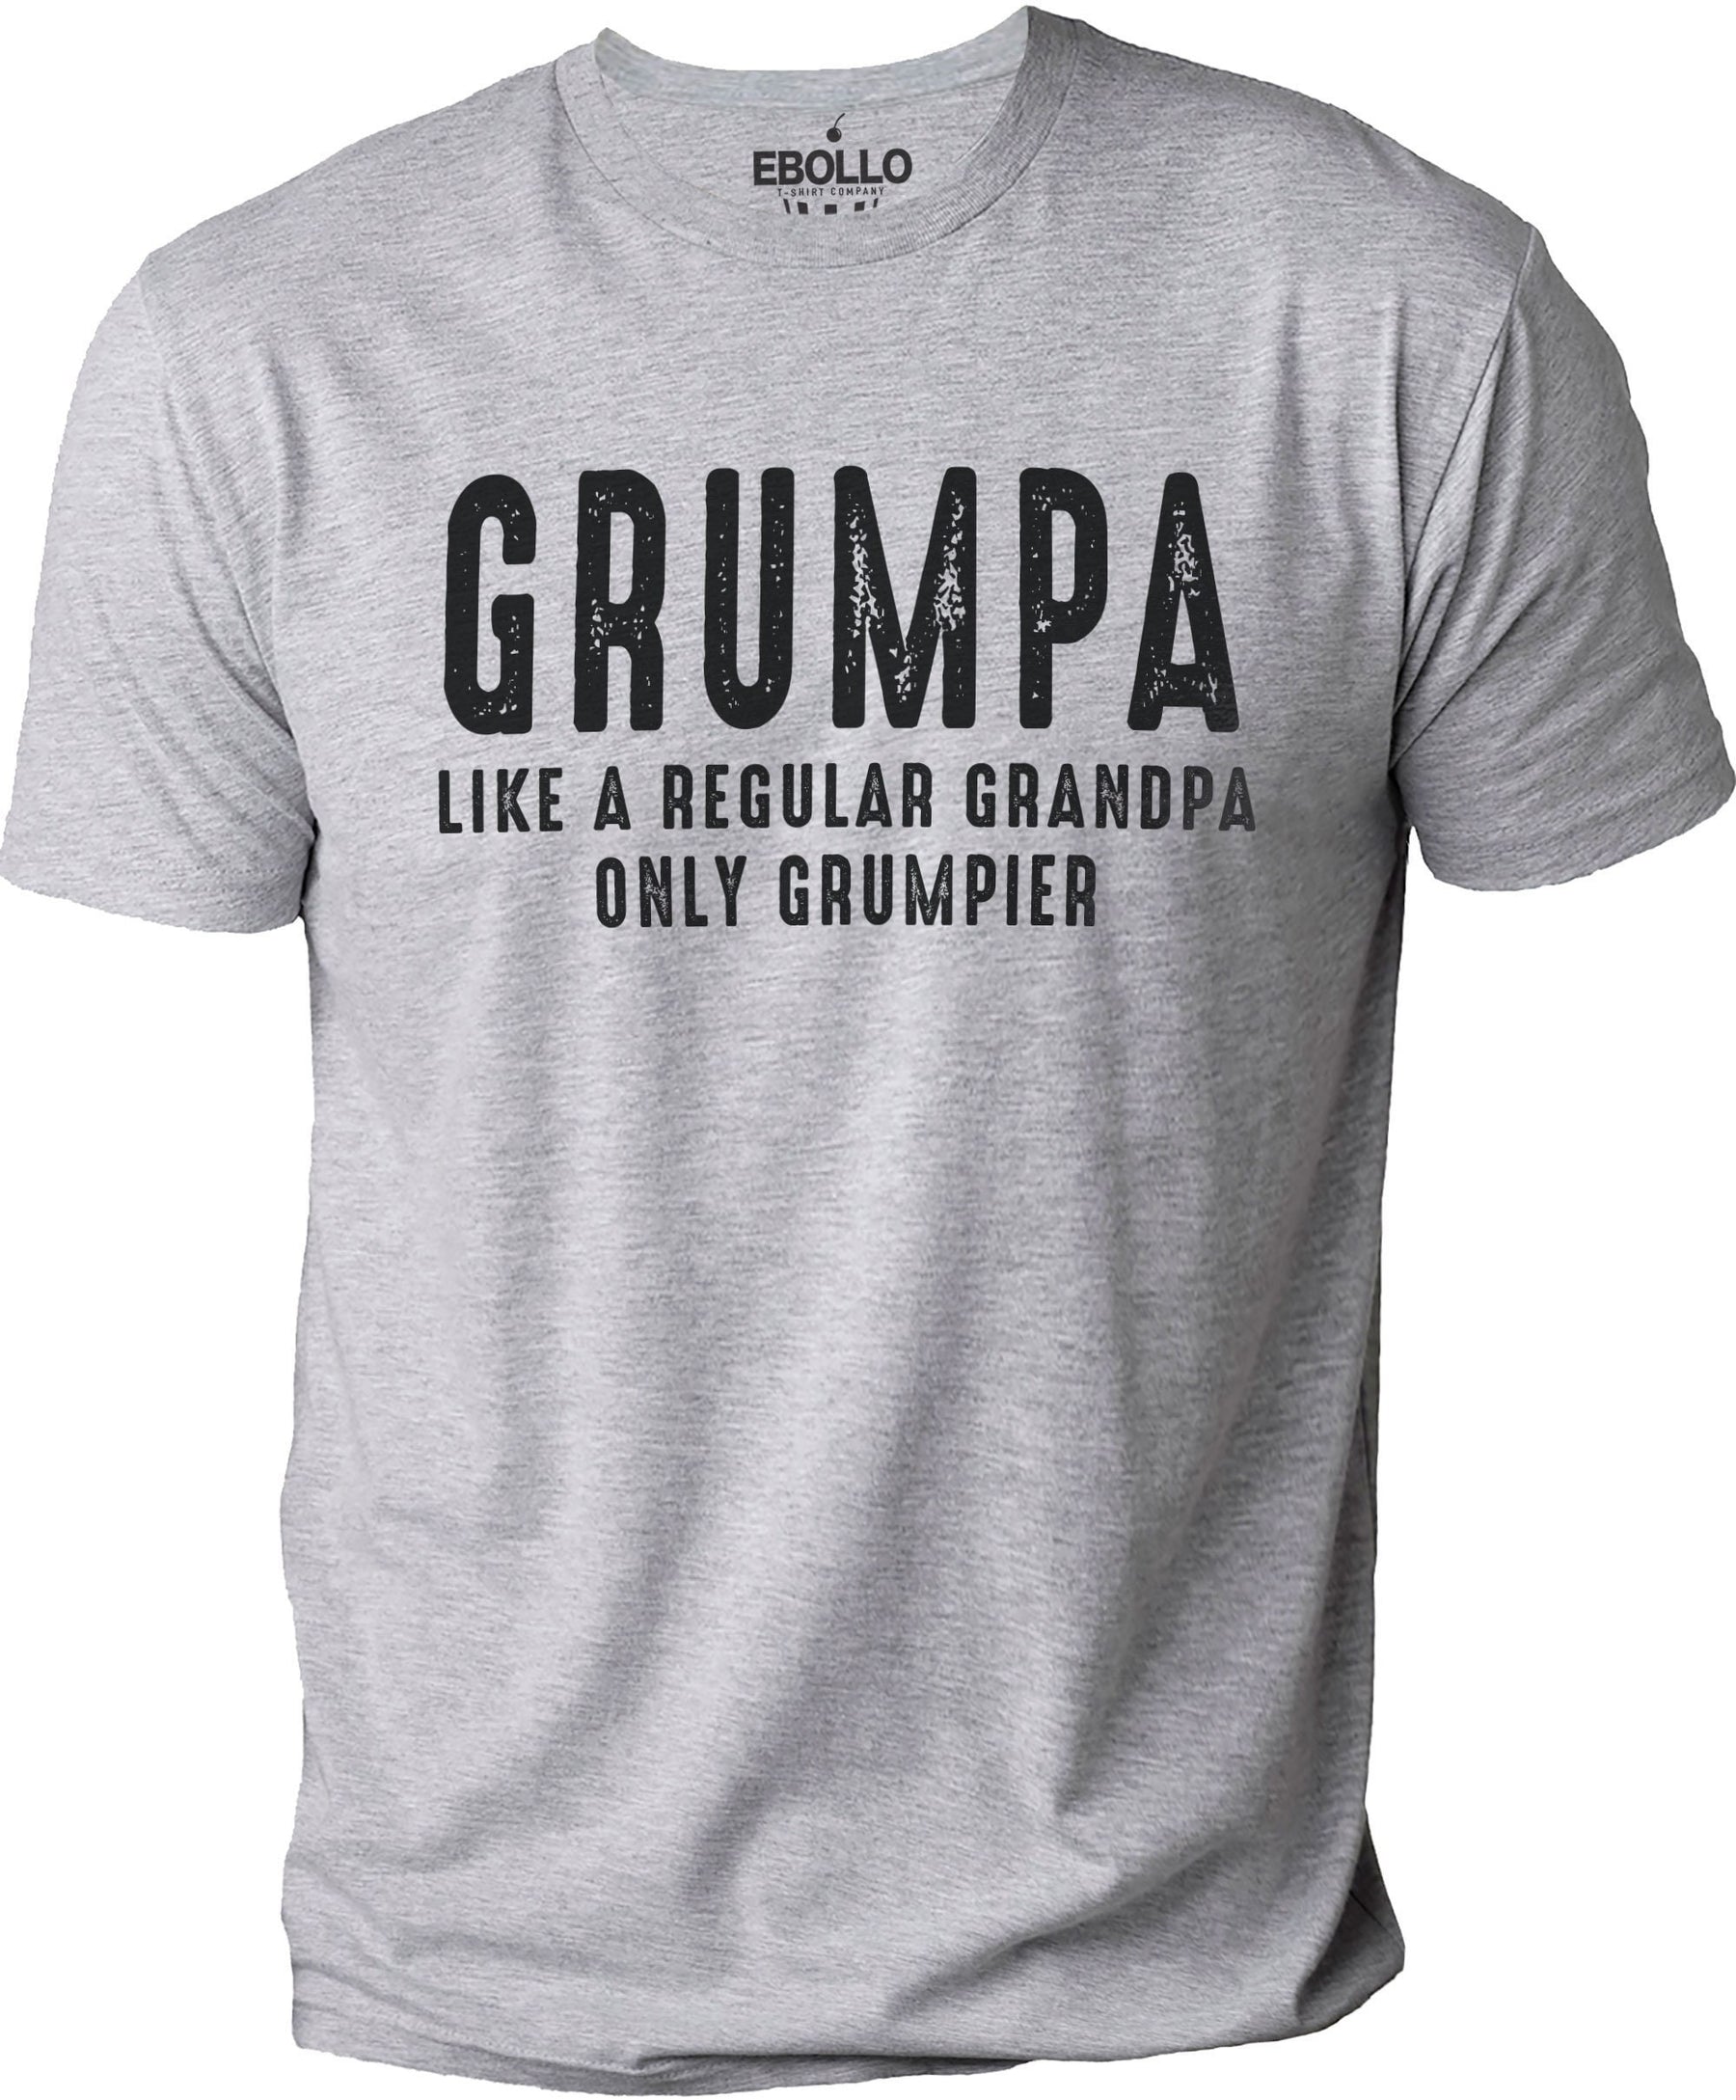 Grumpa, Like a Regular Grandpa Only Grumpier, Fathers Day Gift - Grandpa  shirt - Funny Shirt Men - Grandpa Gift - Grumpy TShirt, Grumpa Tee